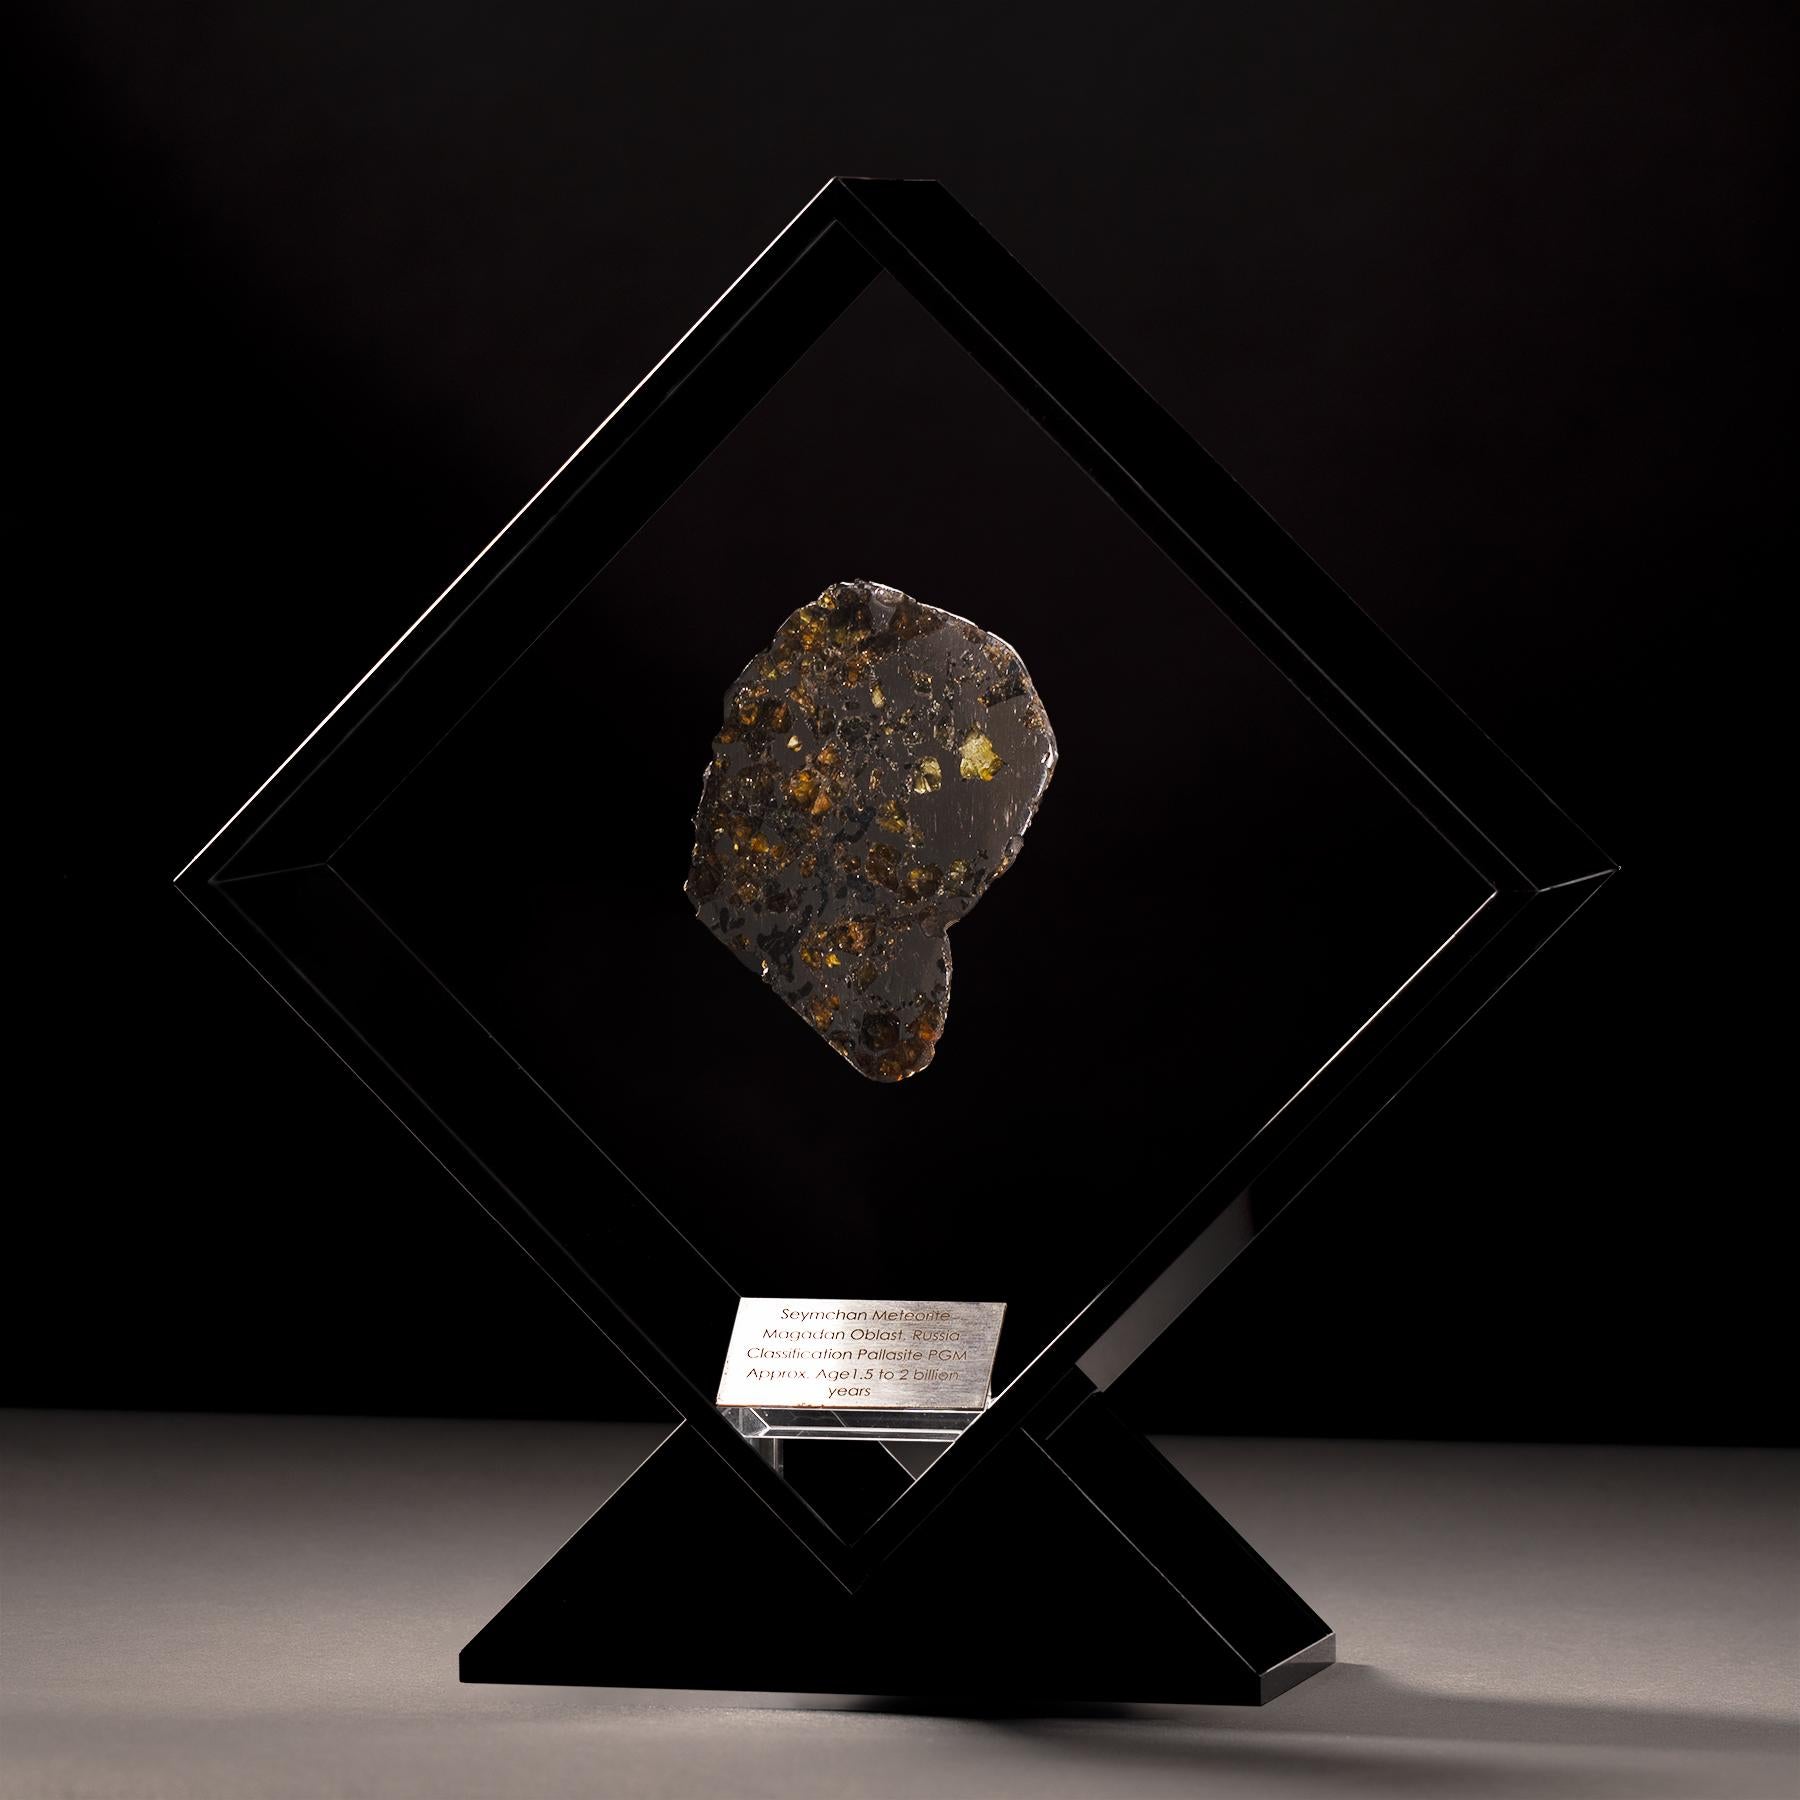 Organic Modern Original Design, Seymchan with Olivine Meteorite in a Black Acrylic Display For Sale